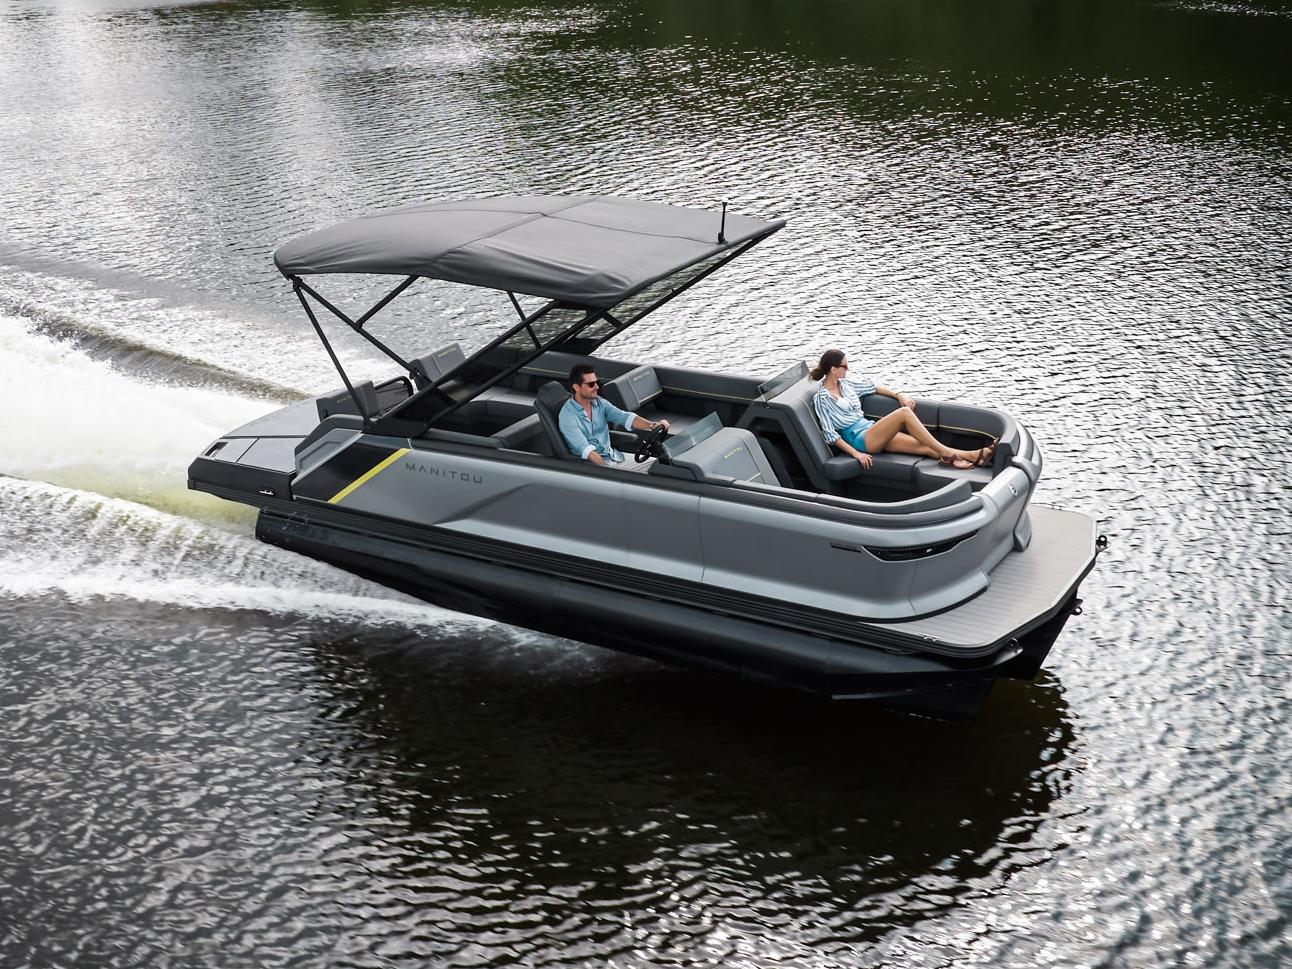 2023 Manitou Explore pontoon boat speeding on a lake